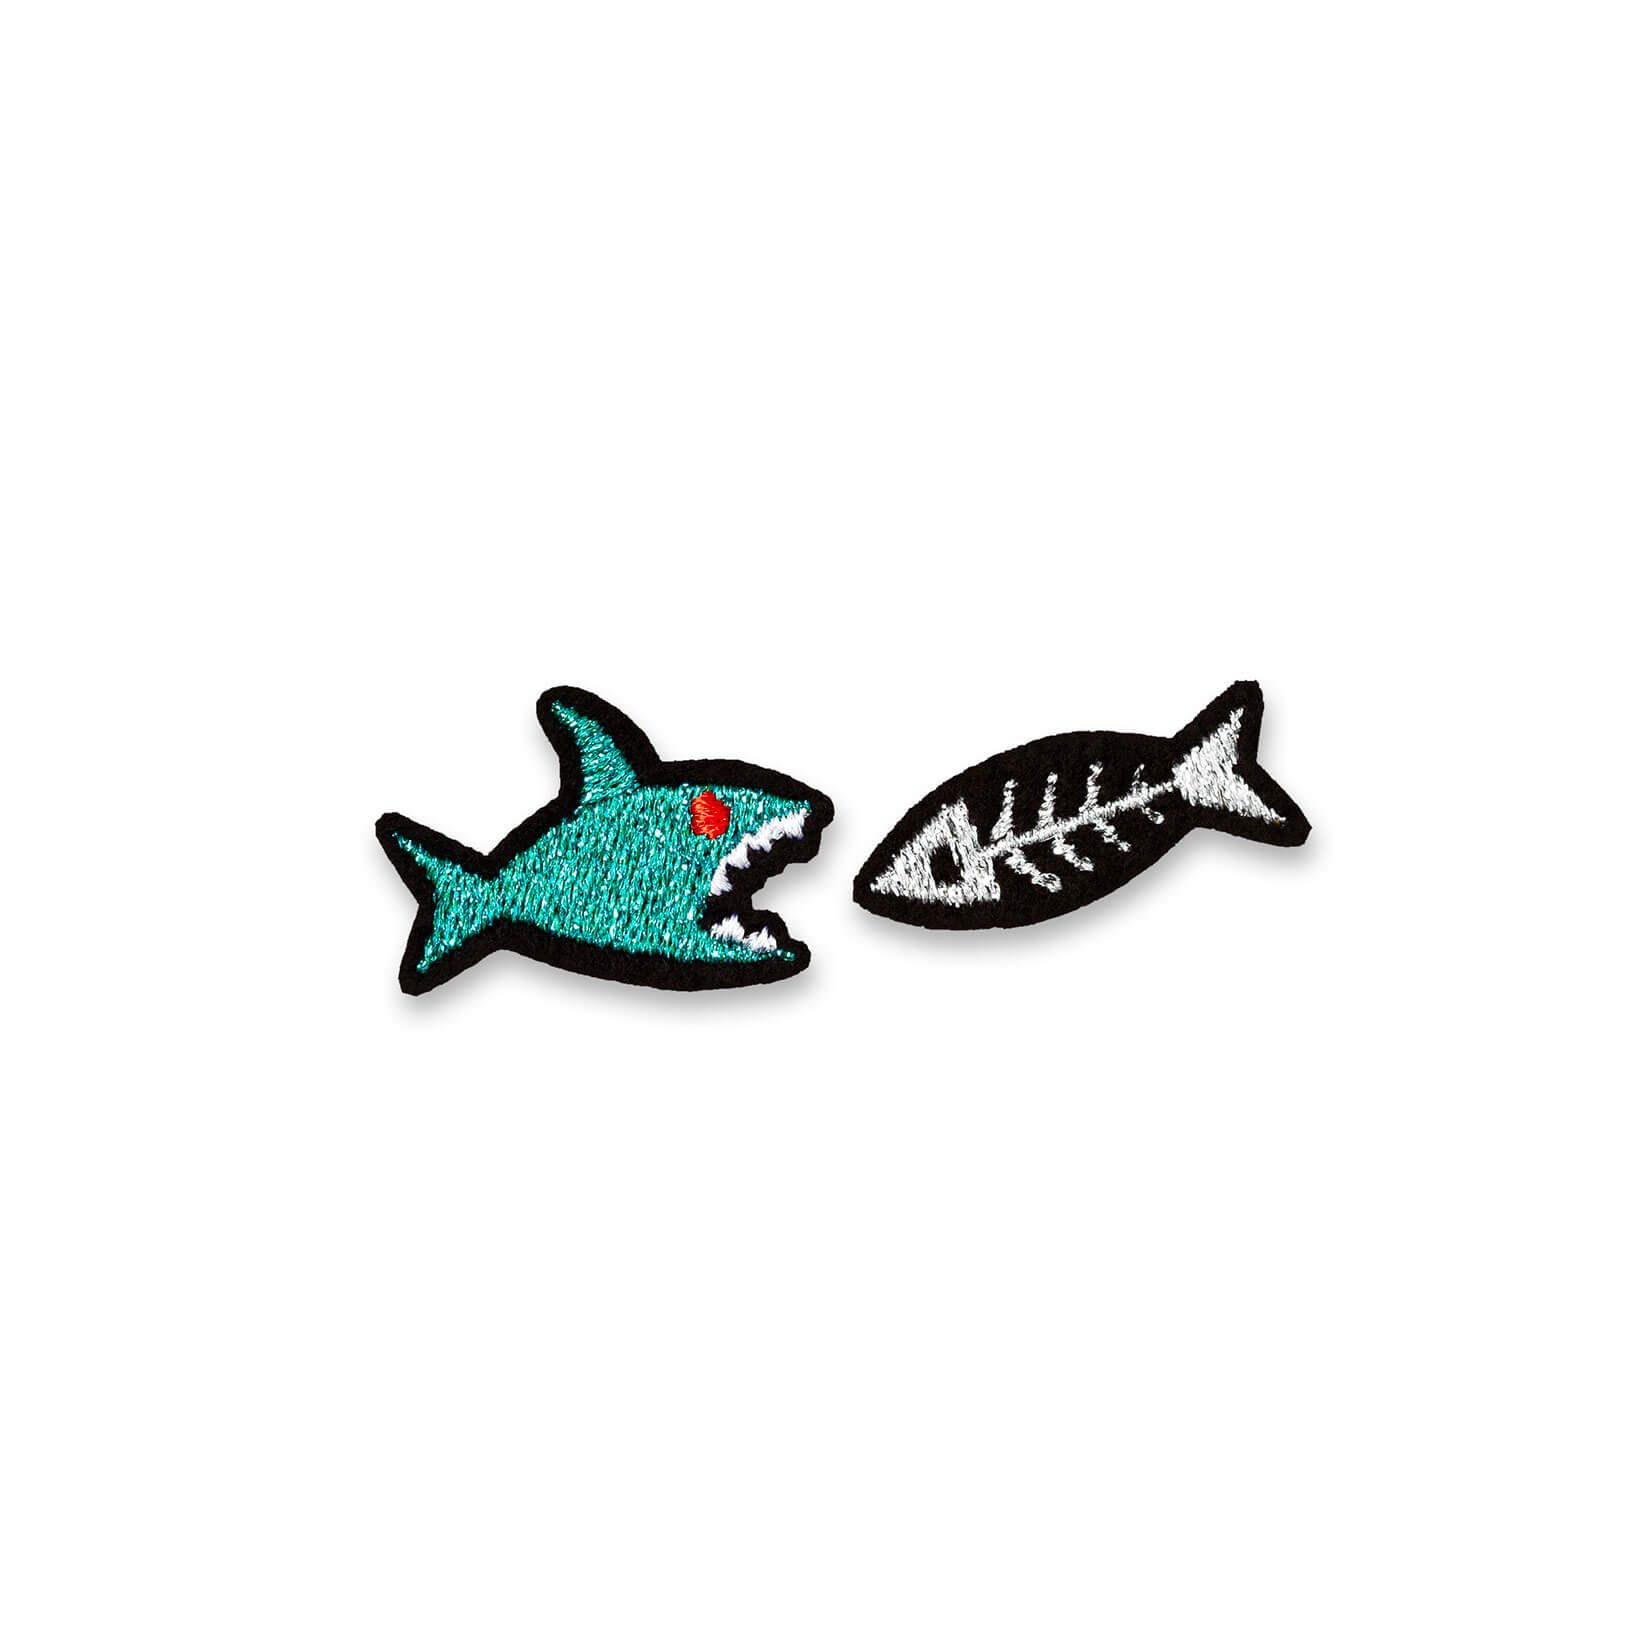 Iron-on patches – Shark + Fishbone